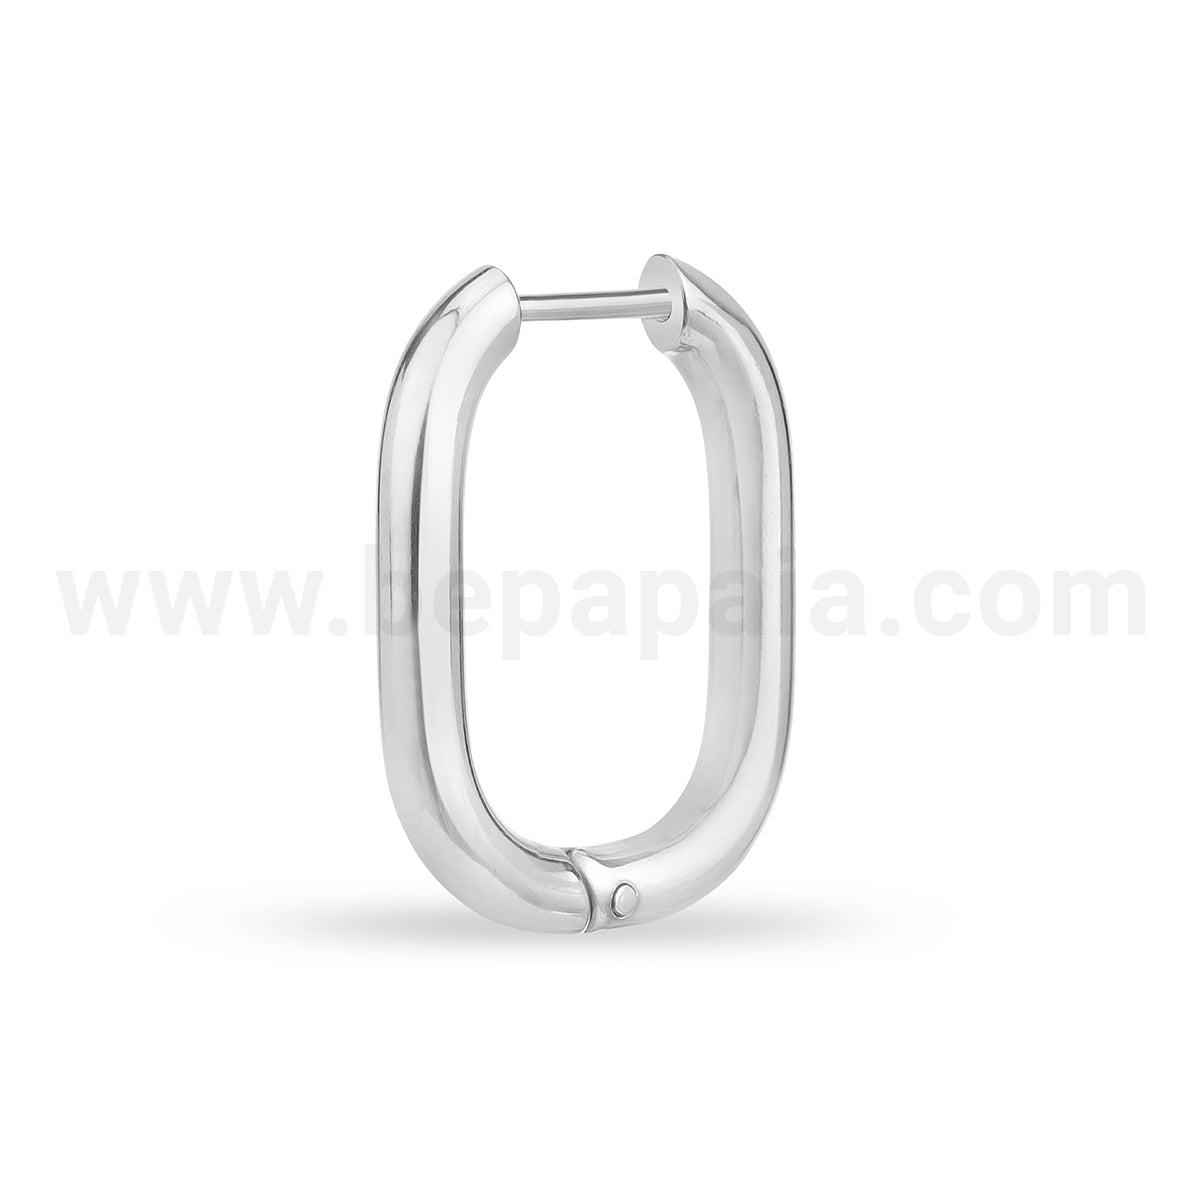 Steel rectangular hoop earring